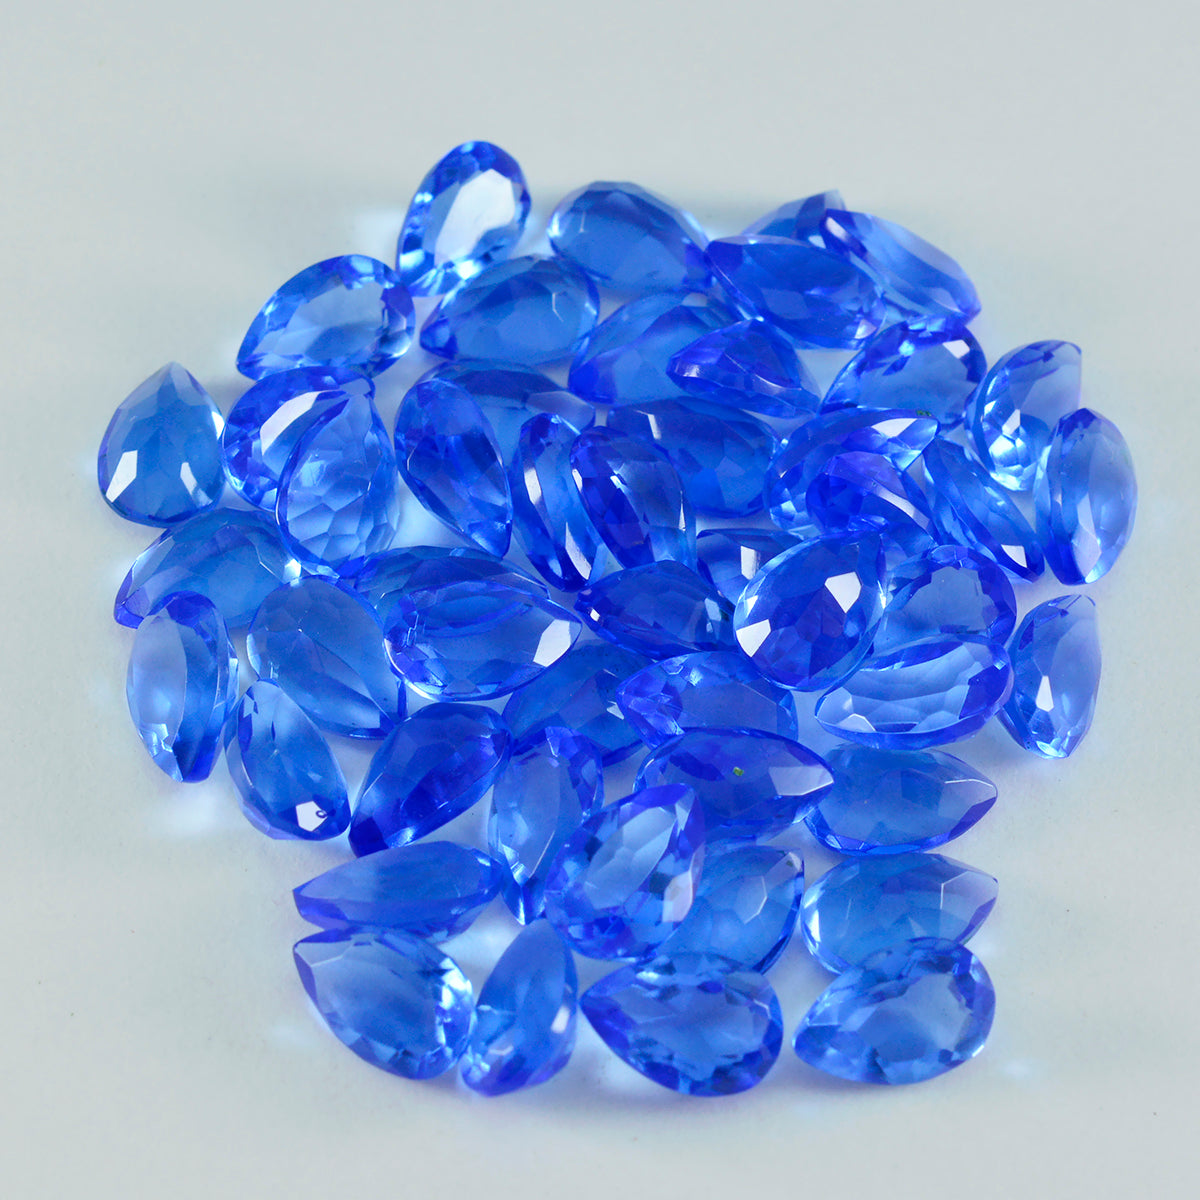 Riyogems 1PC Blauwe Saffier CZ Facet 5x7 mm Peervorm mooie kwaliteitsedelstenen